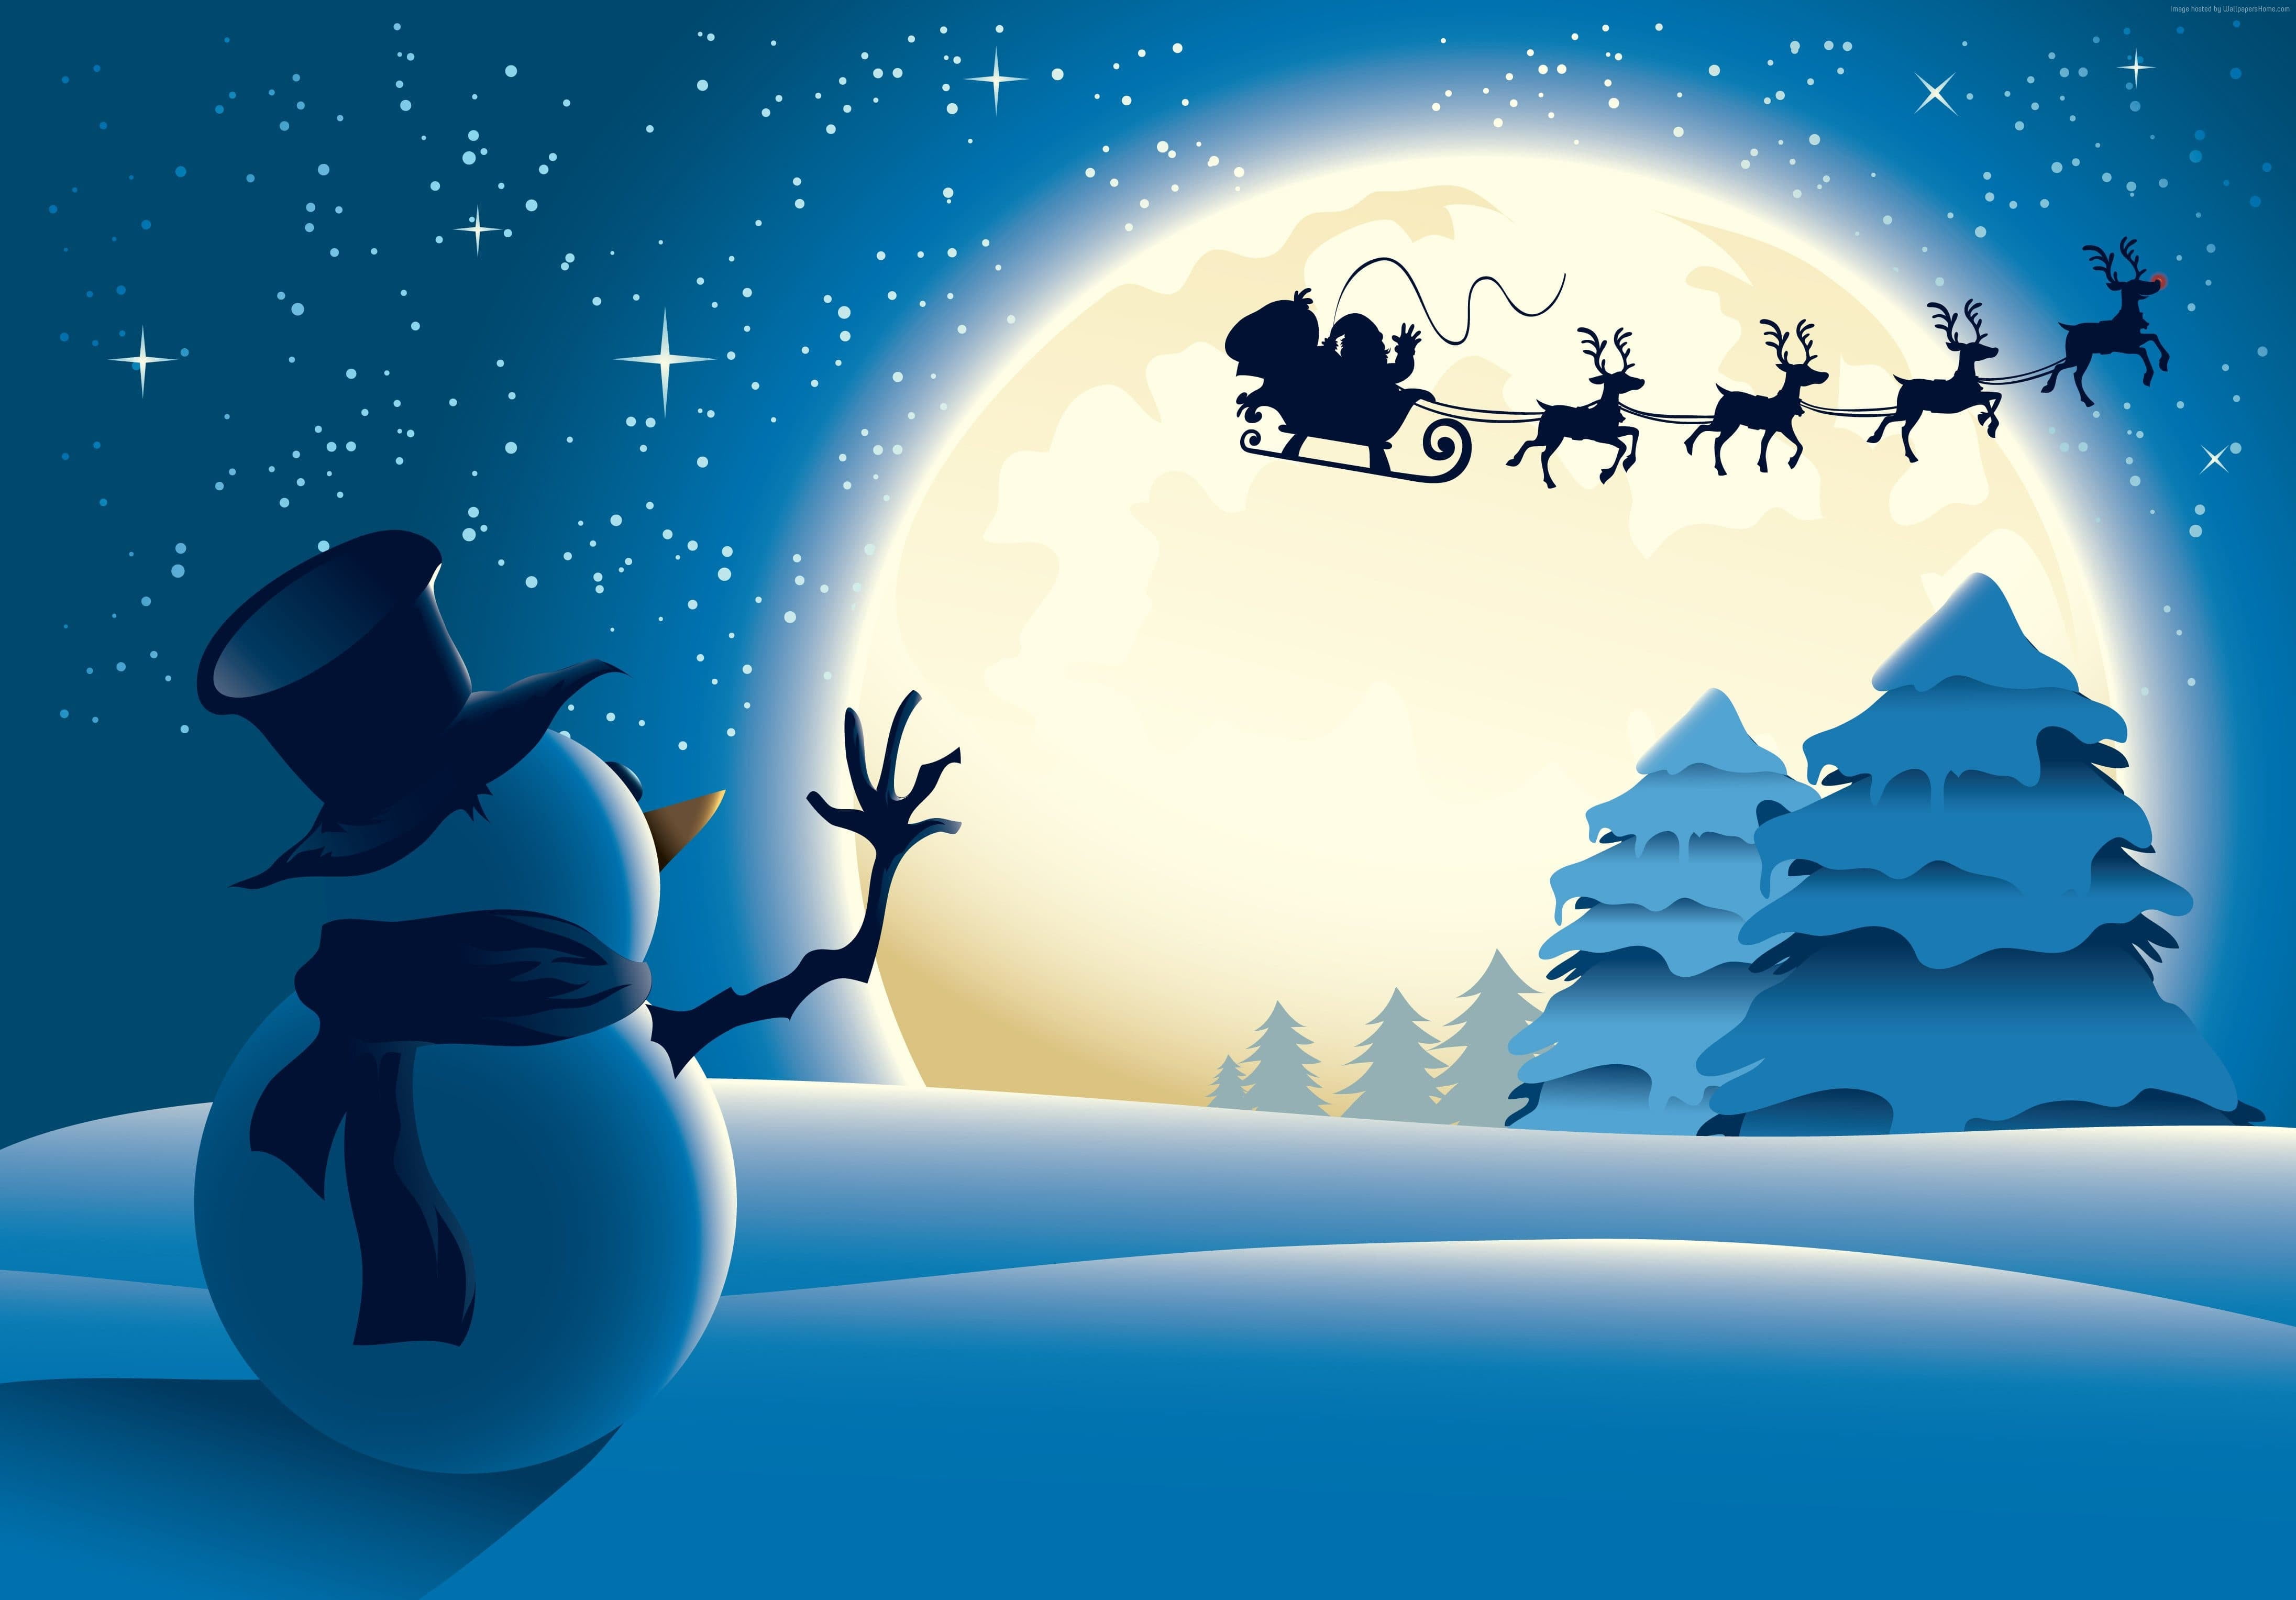 snowman and silhouette of Santa Claus riding sleigh digital wallpaper